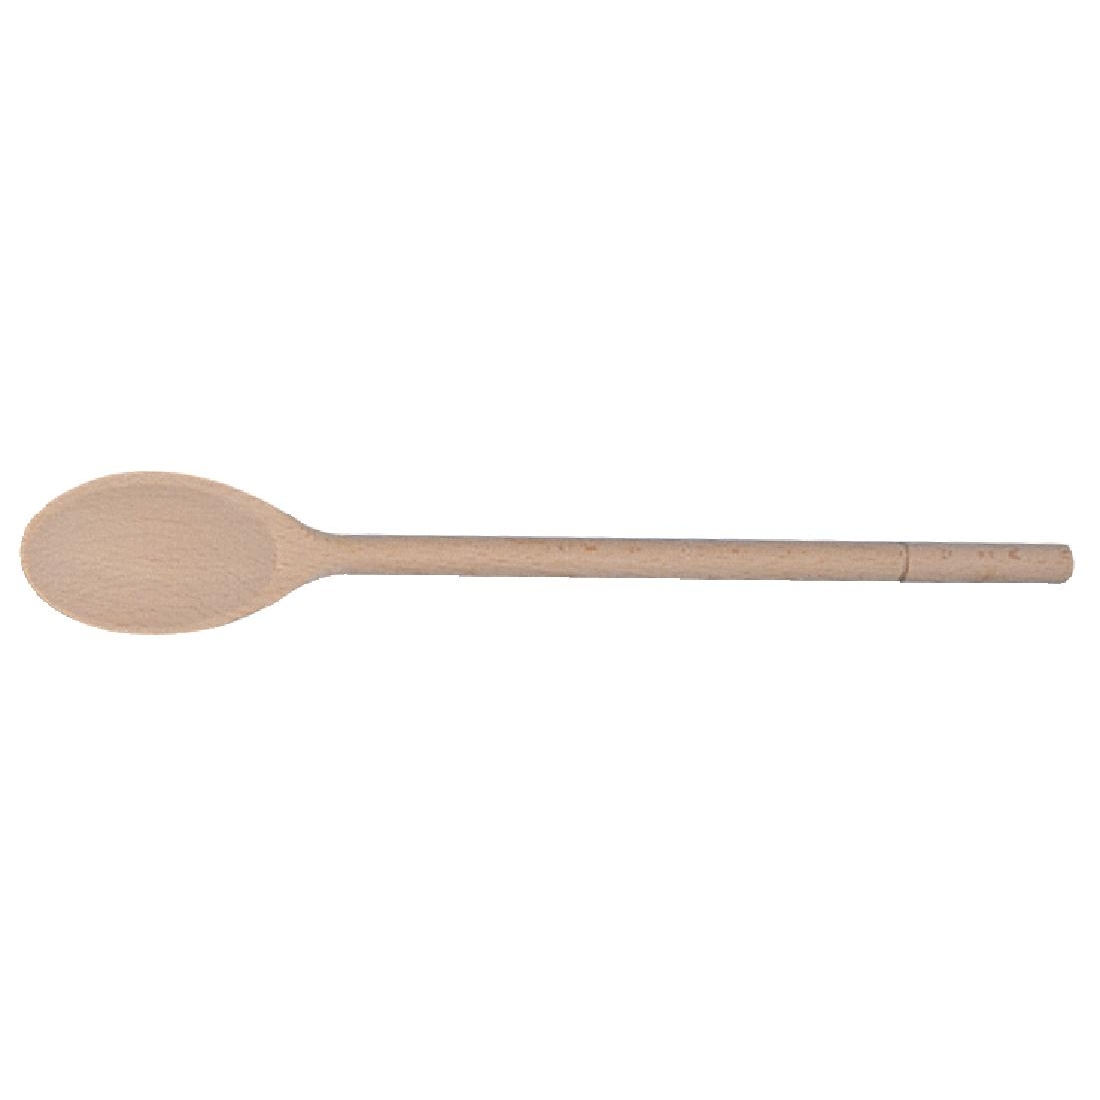 Vogue wooden spoon 16